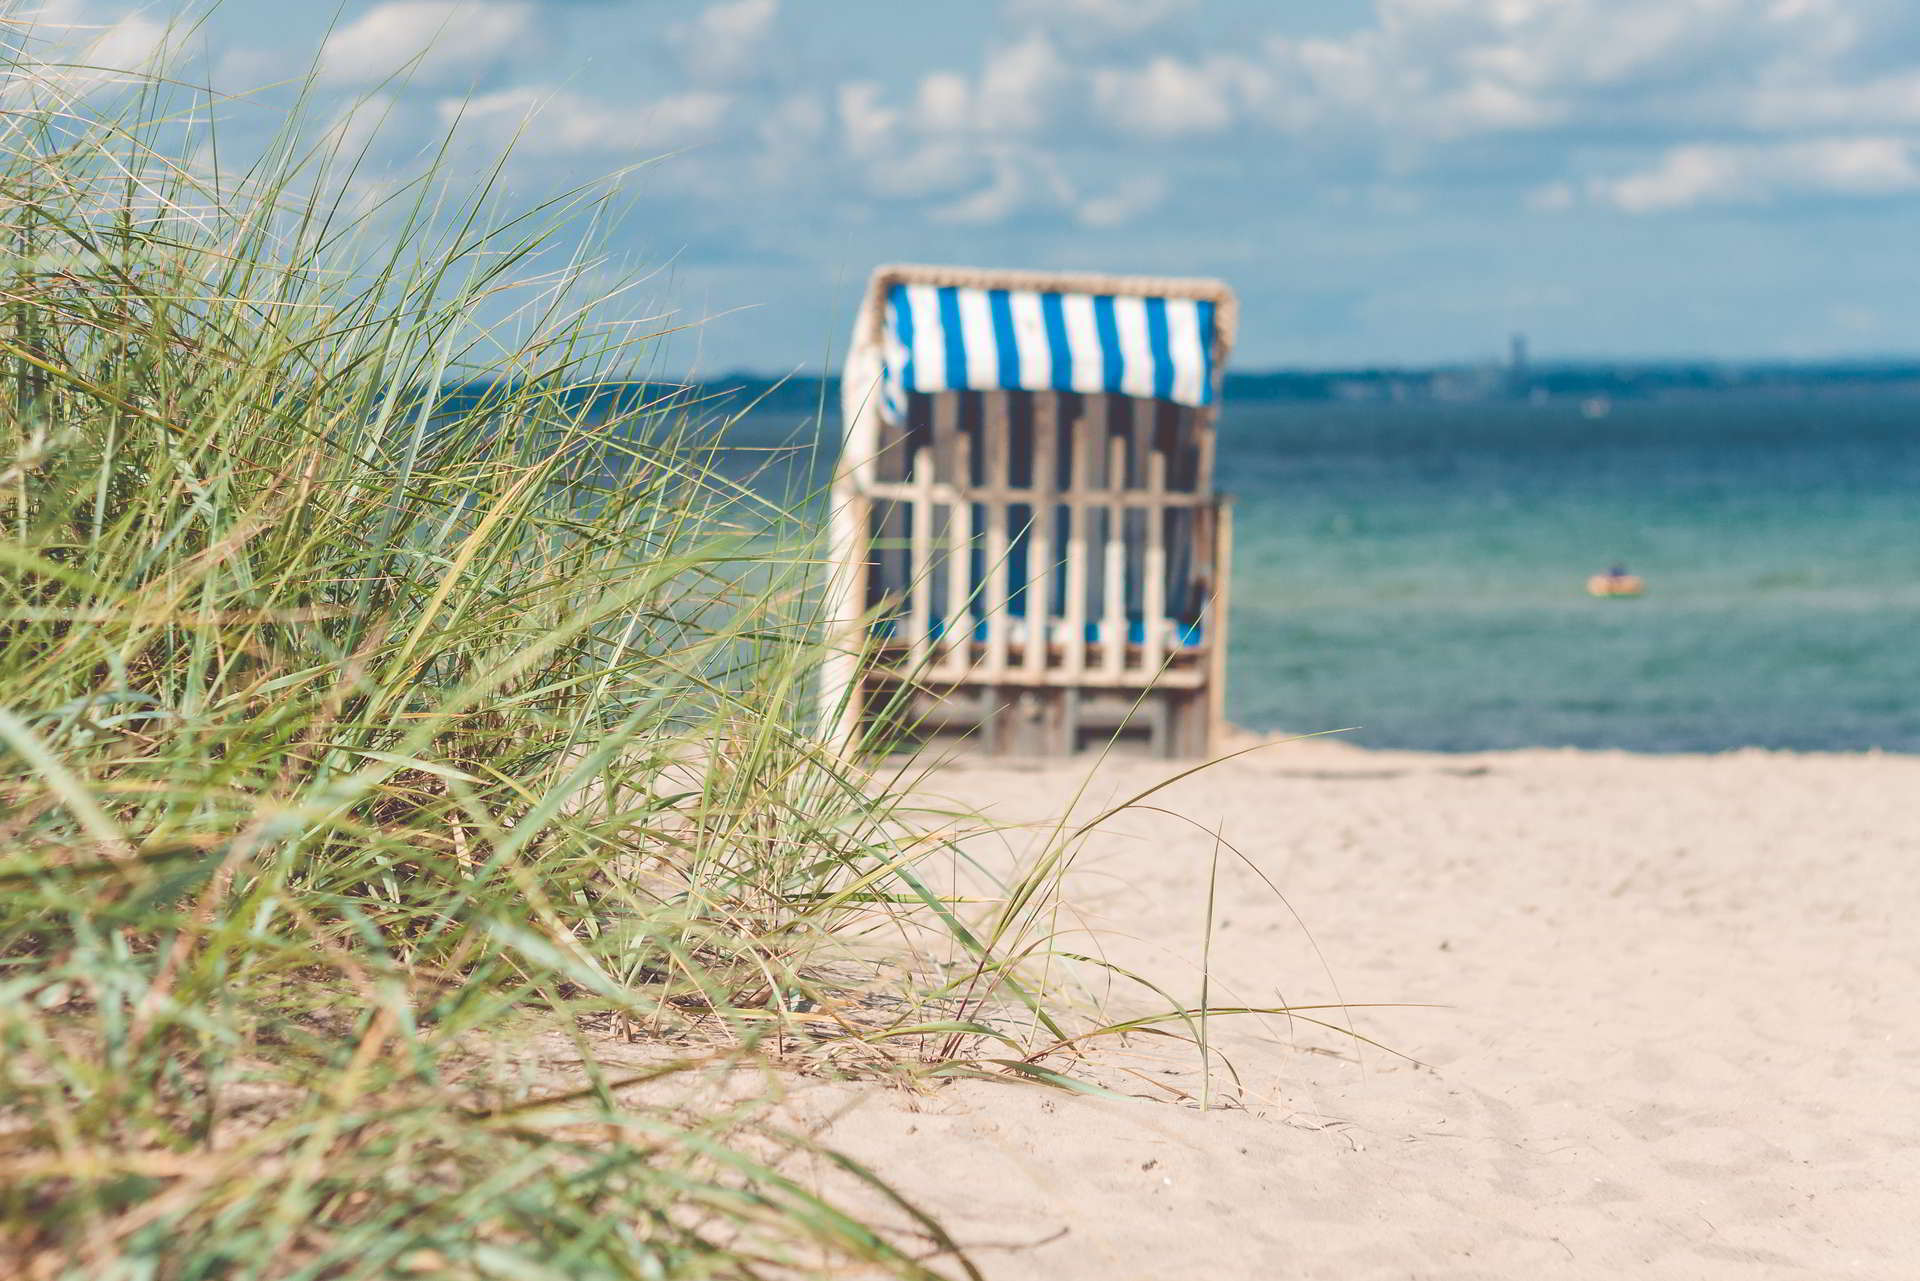 sandy beach traditional wooden beach chairs northern germany coast balti